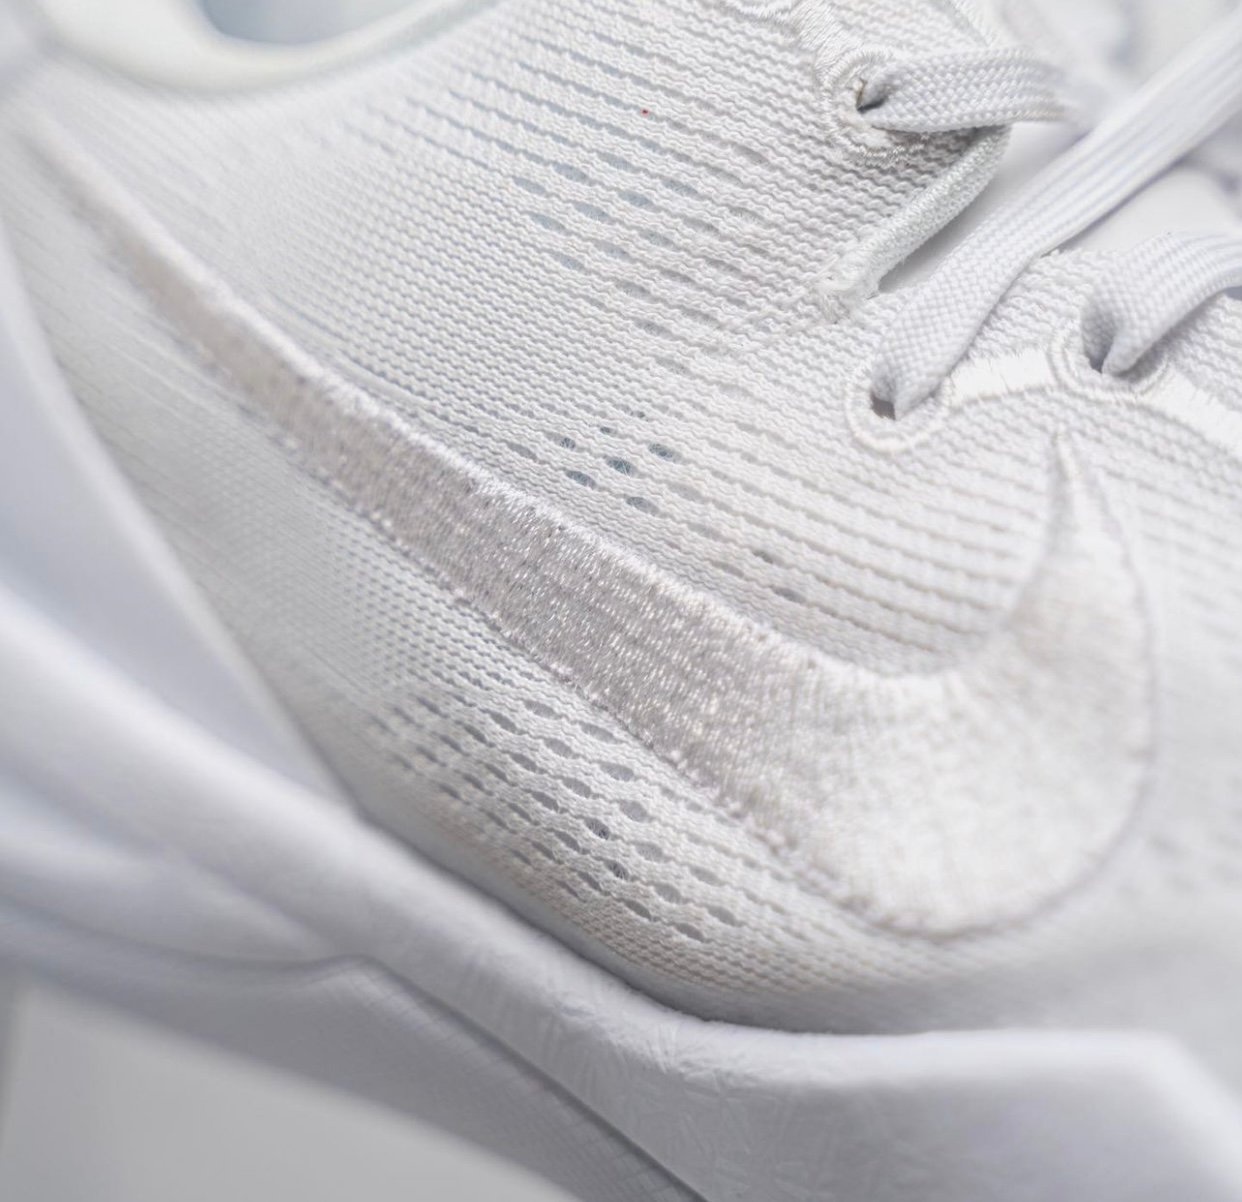 Nike Kobe 8 Protro Triple White FJ9364-100 Release Date